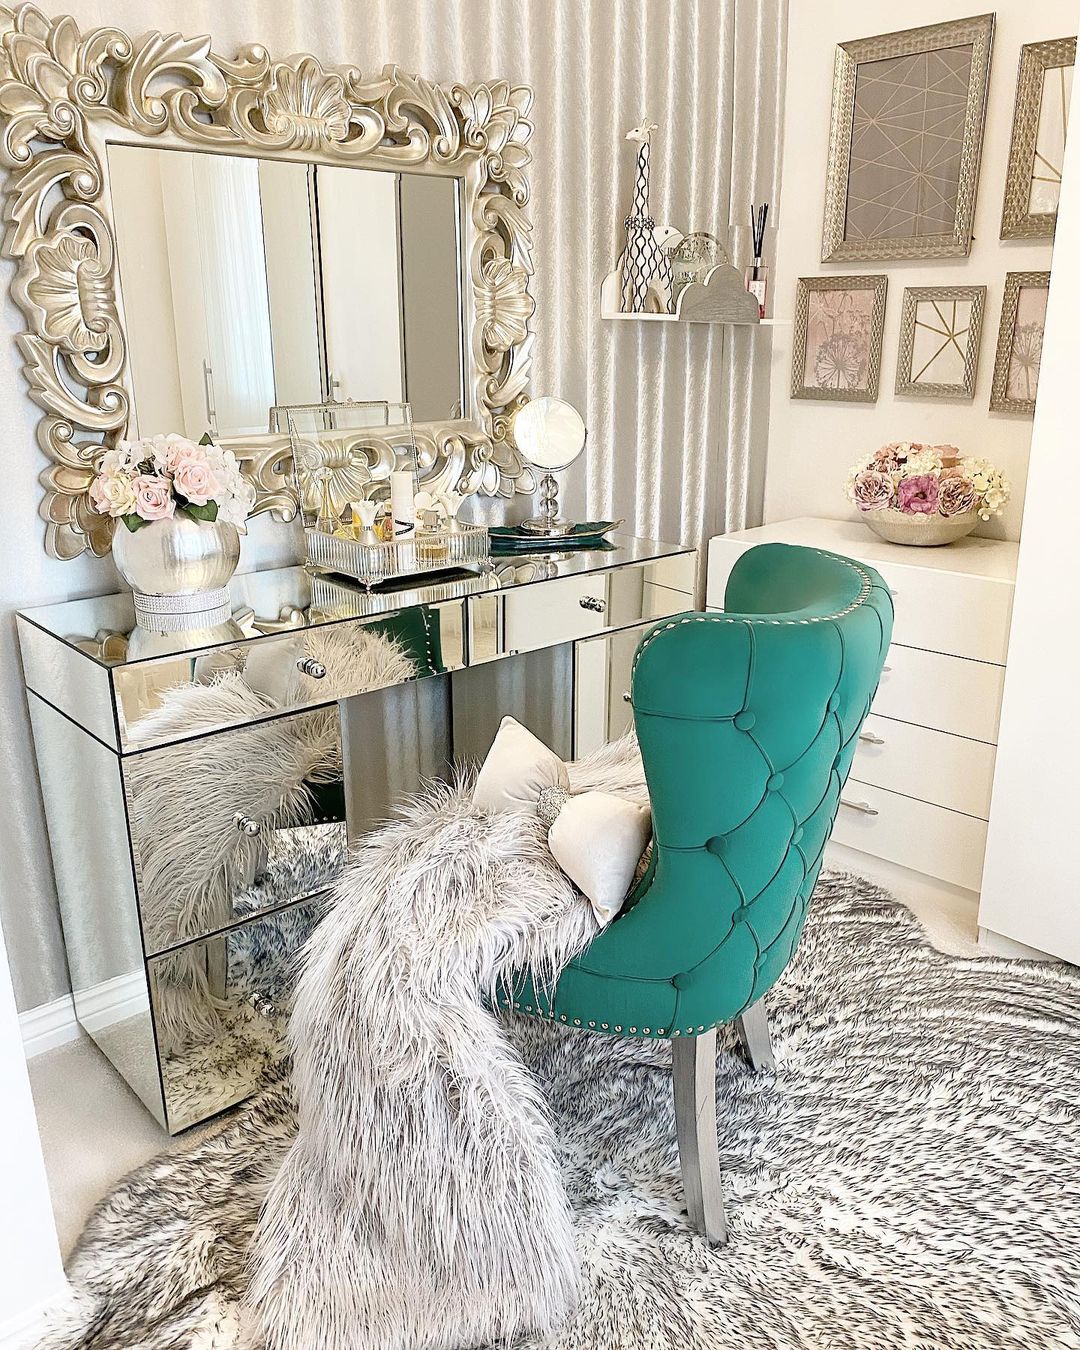 Glam style mirror finish bedroom vanity. Photo by Instagram user @ivys_luxury_home